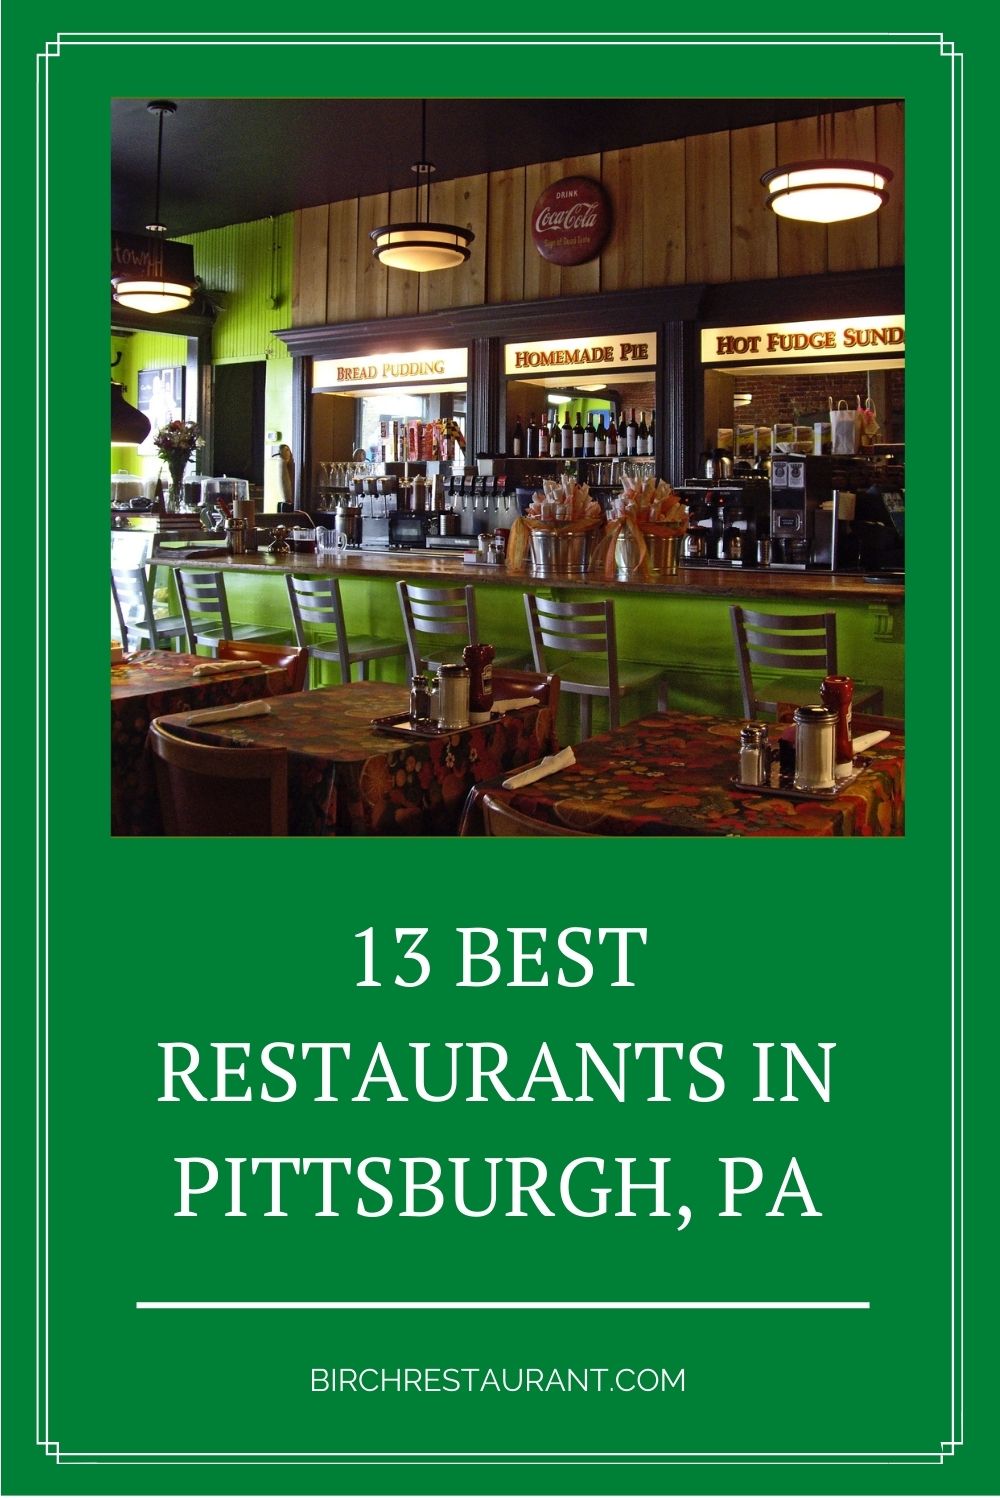 Best Restaurants in Pittsburgh